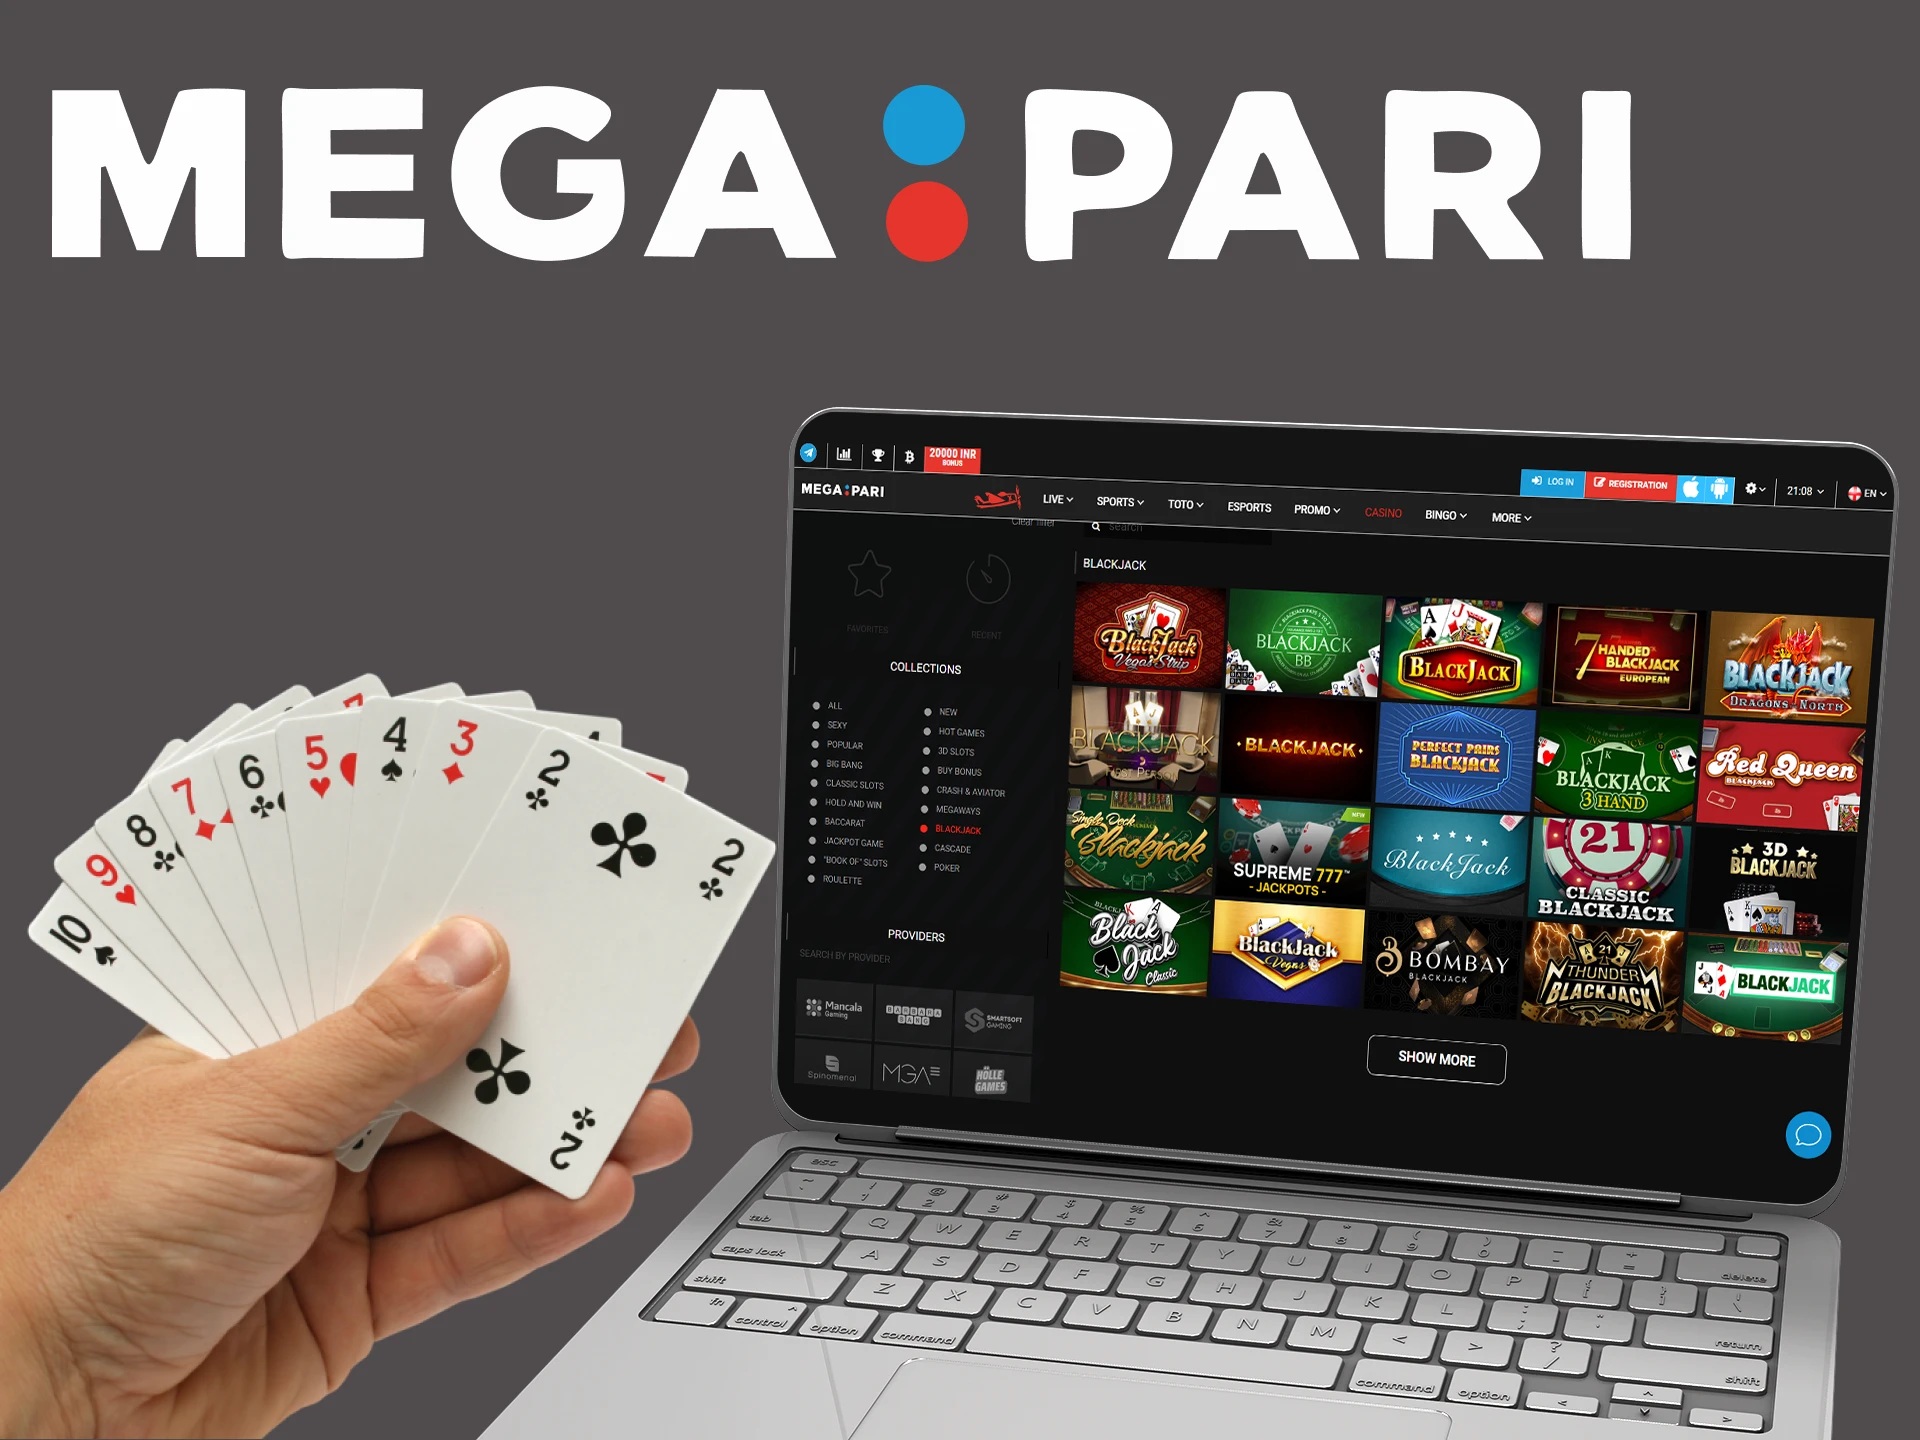 Choose Blackjack for gambling on Megapari.